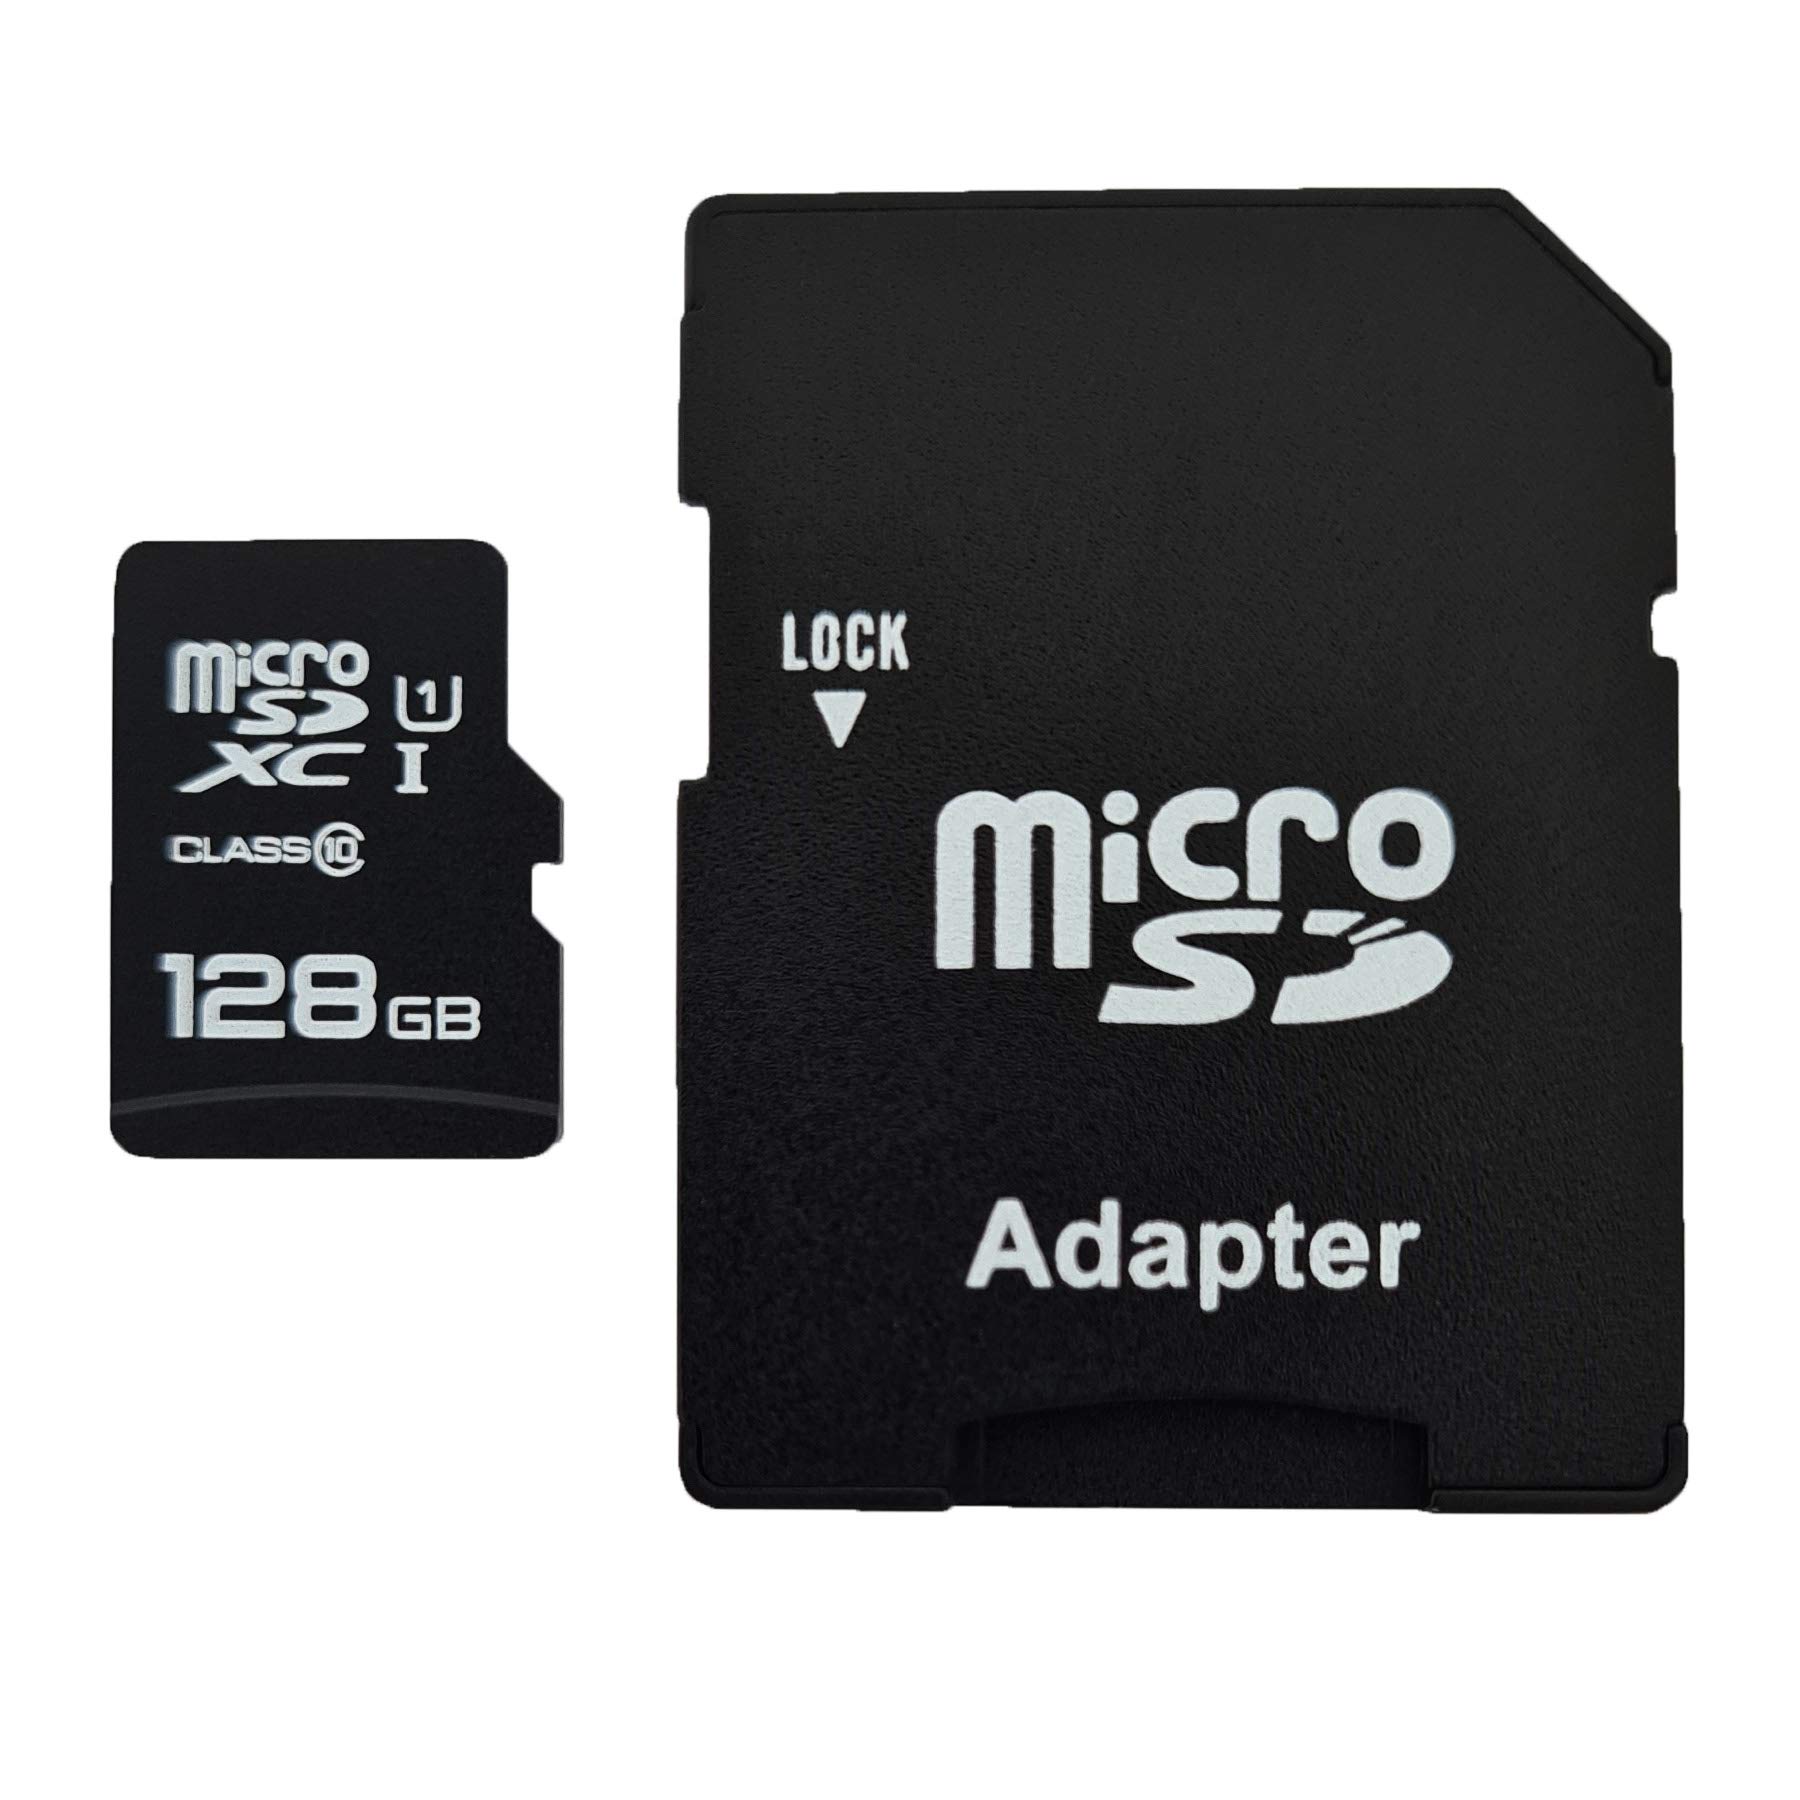 dekoelektropunktde 128GB MicroSDXC Speicherkarte mit Adapter Class 10 kompatibel für Canon IXUS 135 170 190 75 140